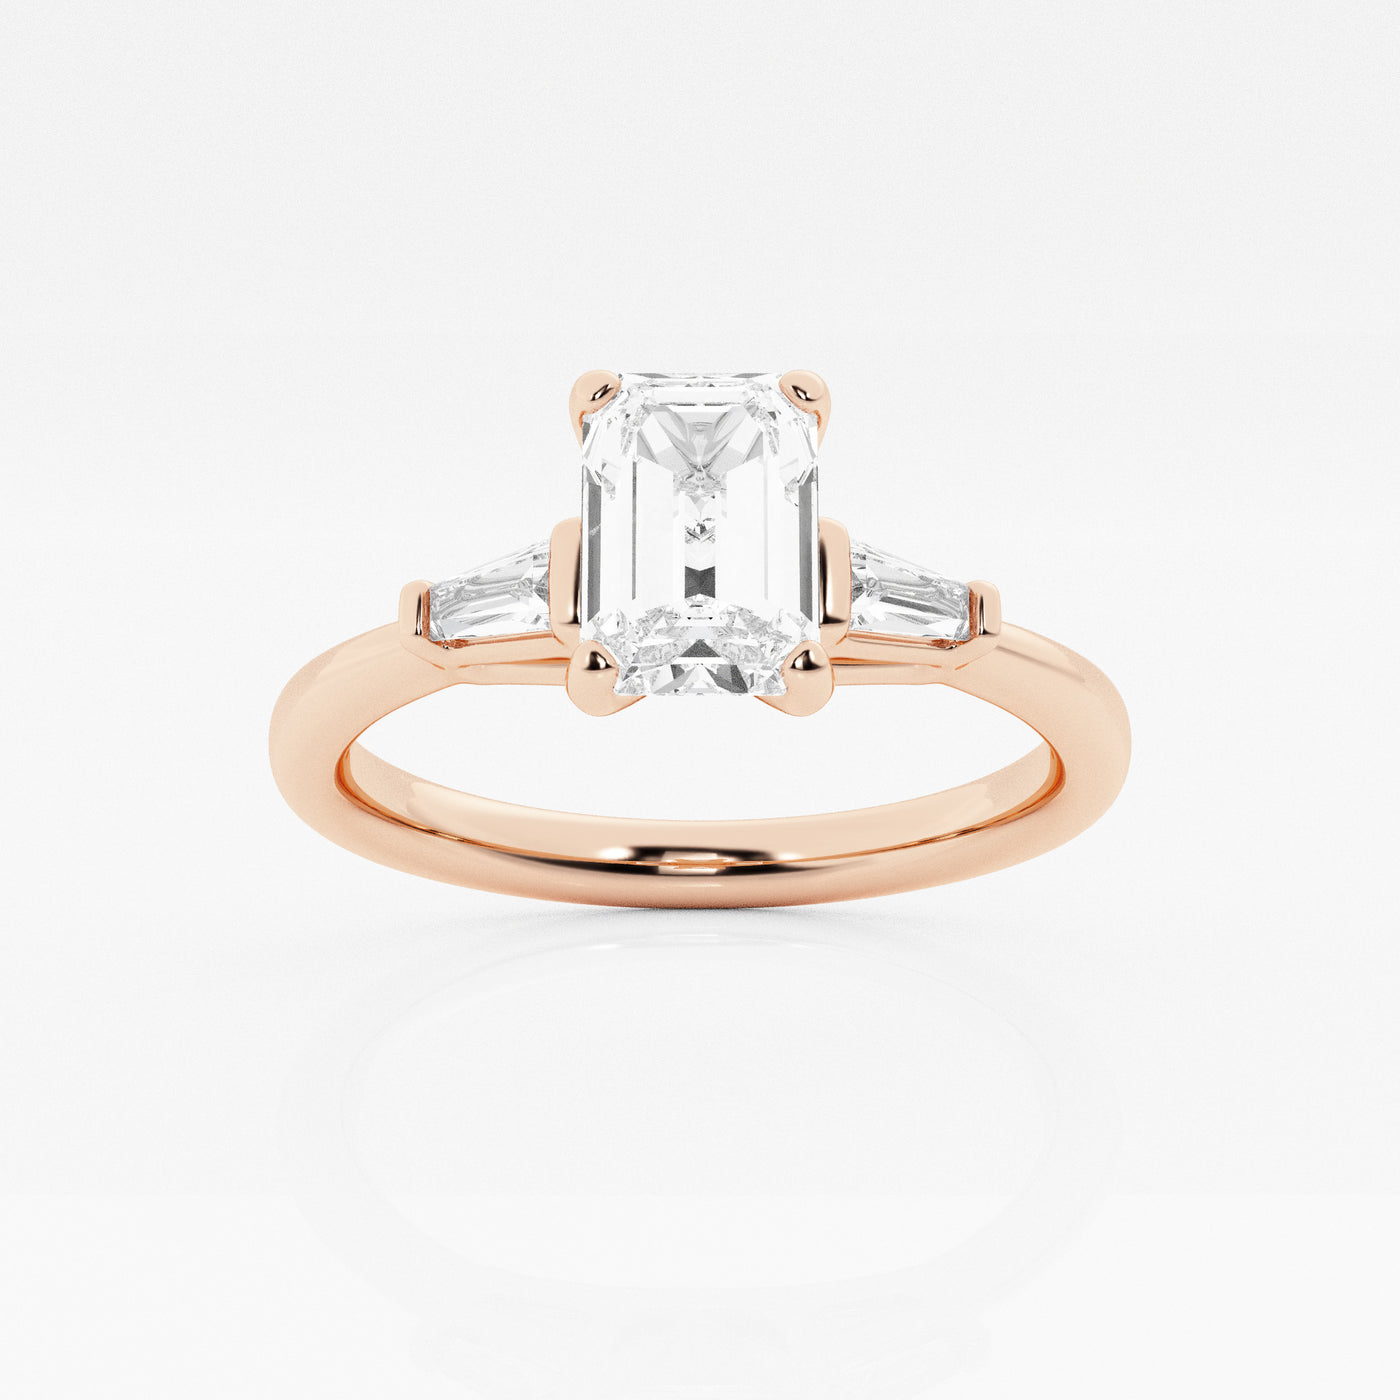 _main_image@SKU:LGR0617X2E100SOGS3~#carat_1.14#diamond-quality_def,-vs1+#metal_18k-rose-gold